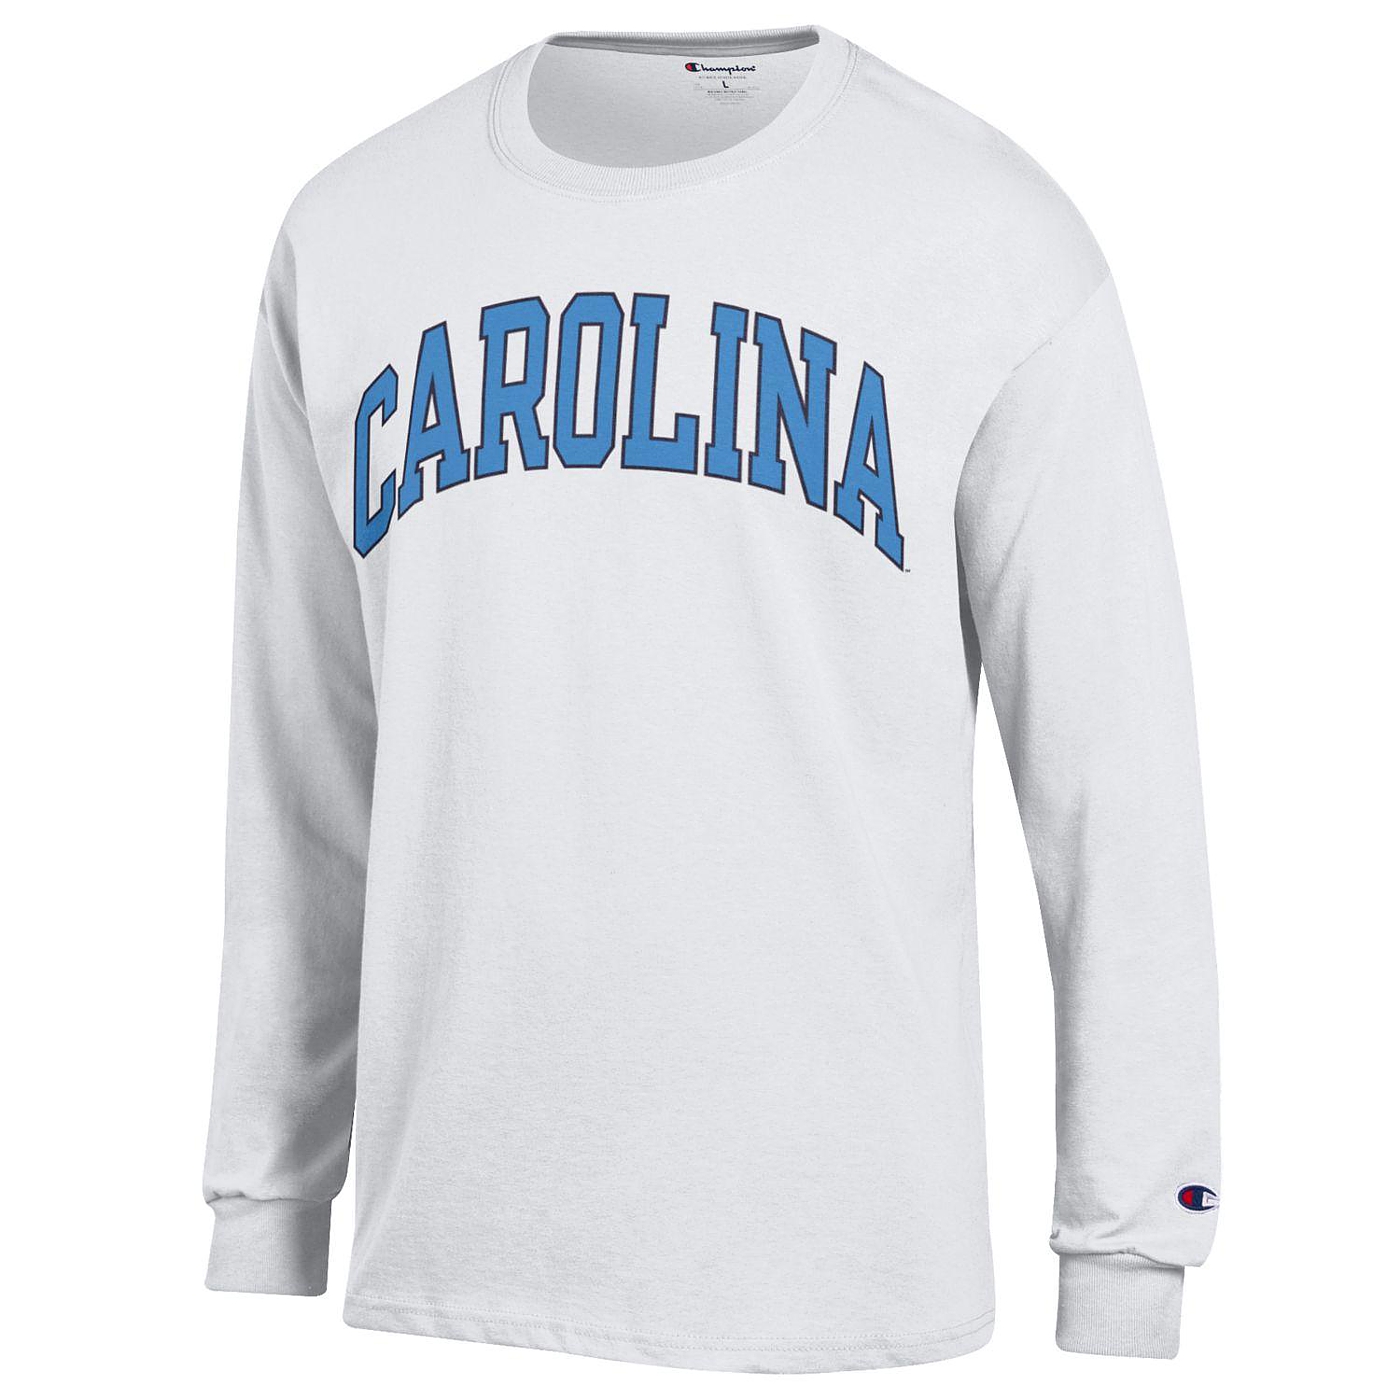 Carolina Volleyball T-Shirt with UNC Logo by Champion M